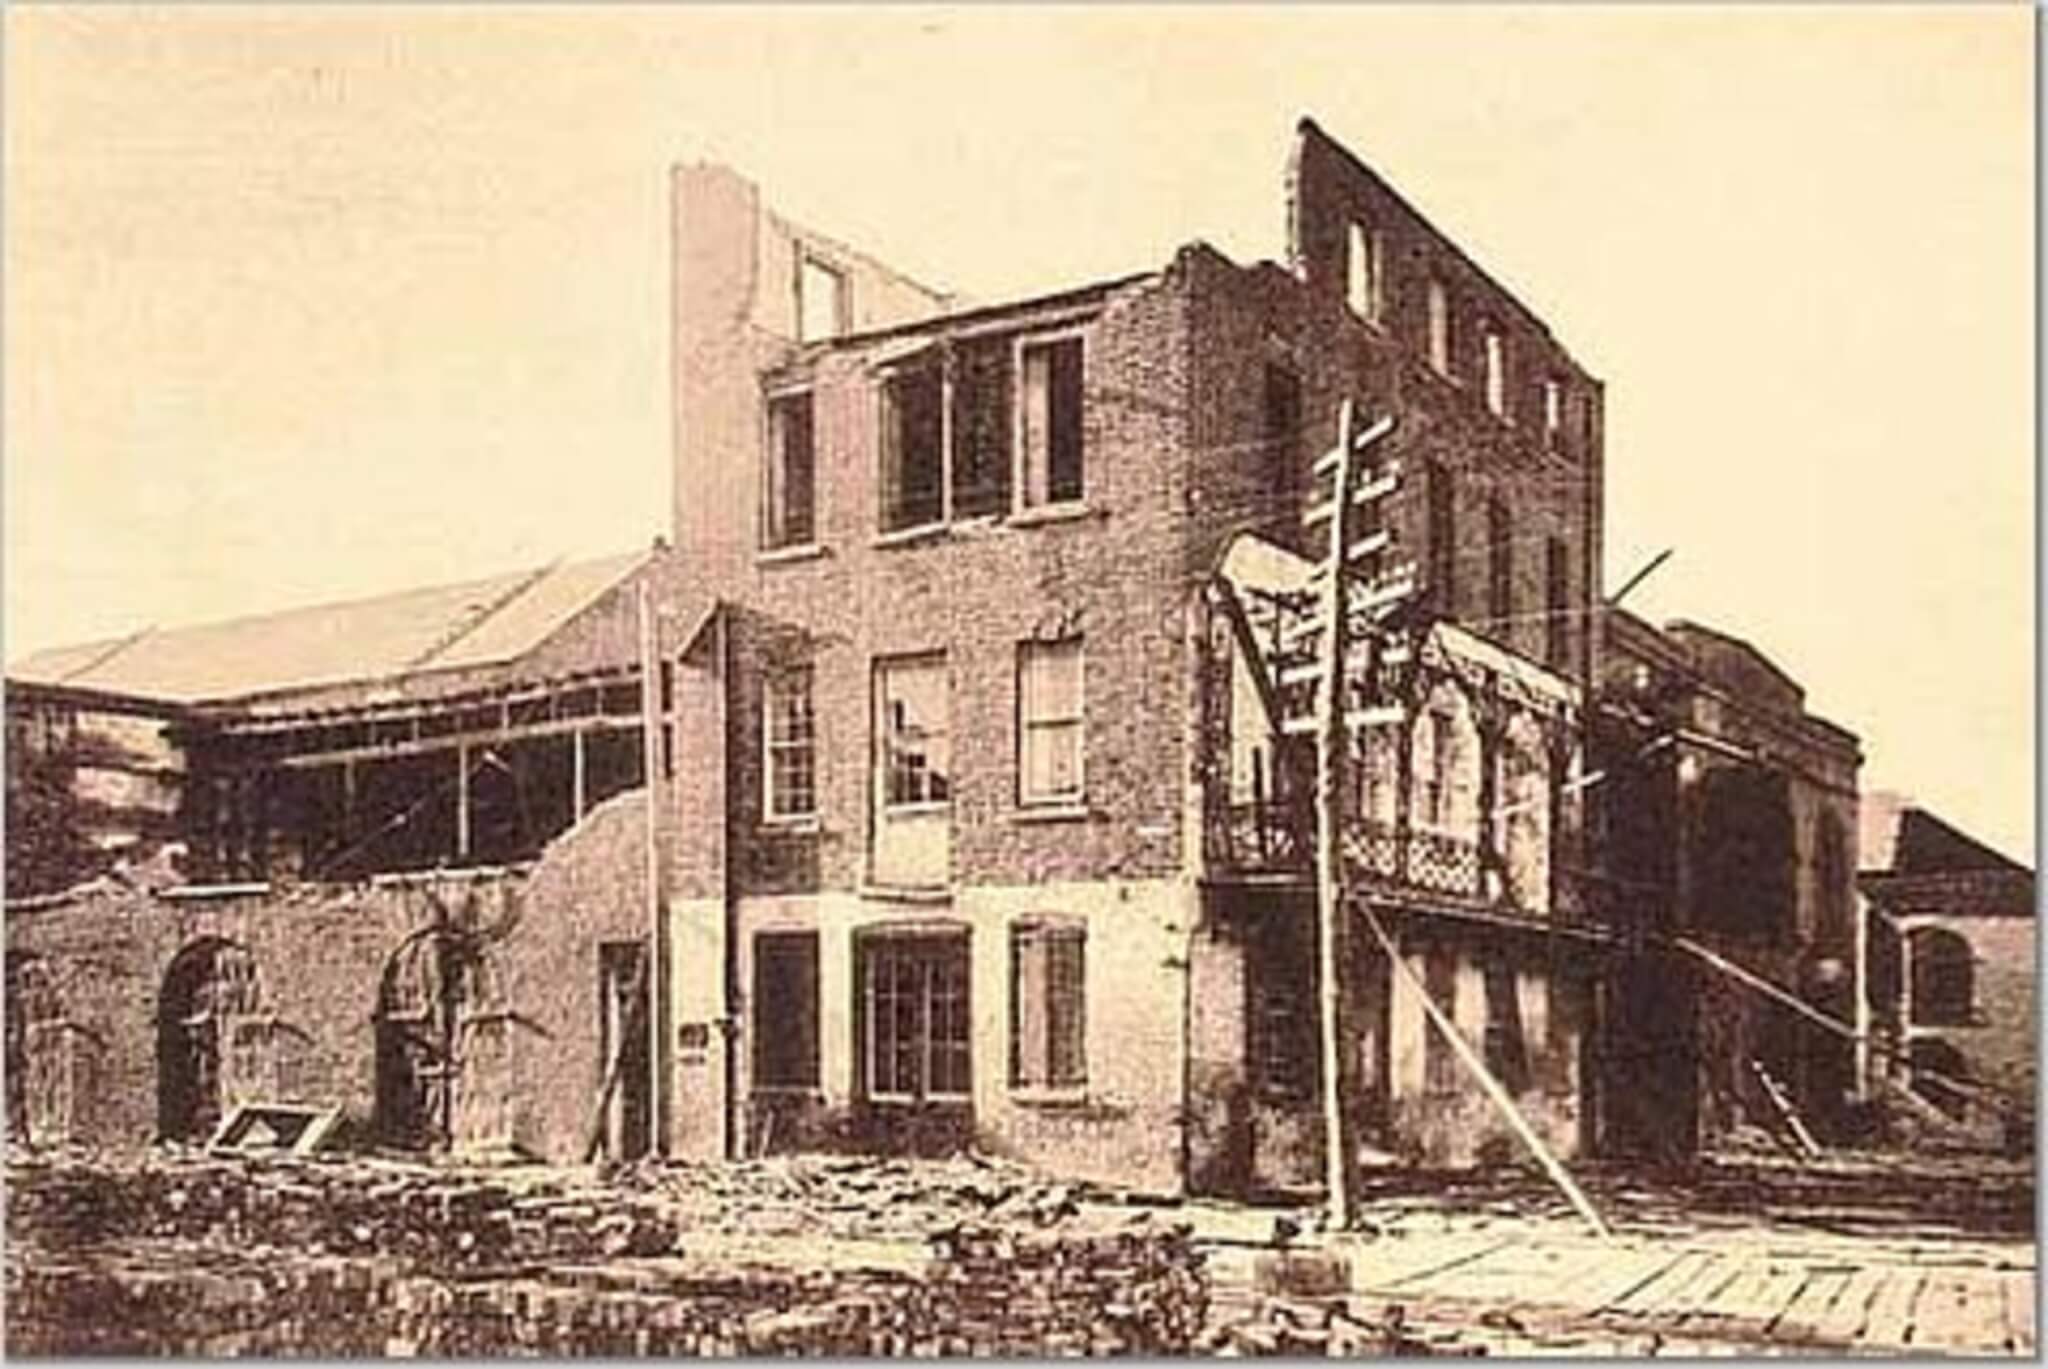 In 1886, a devastating magnitude 6.7-7.3 earthquake shook Charleston, South Carolina